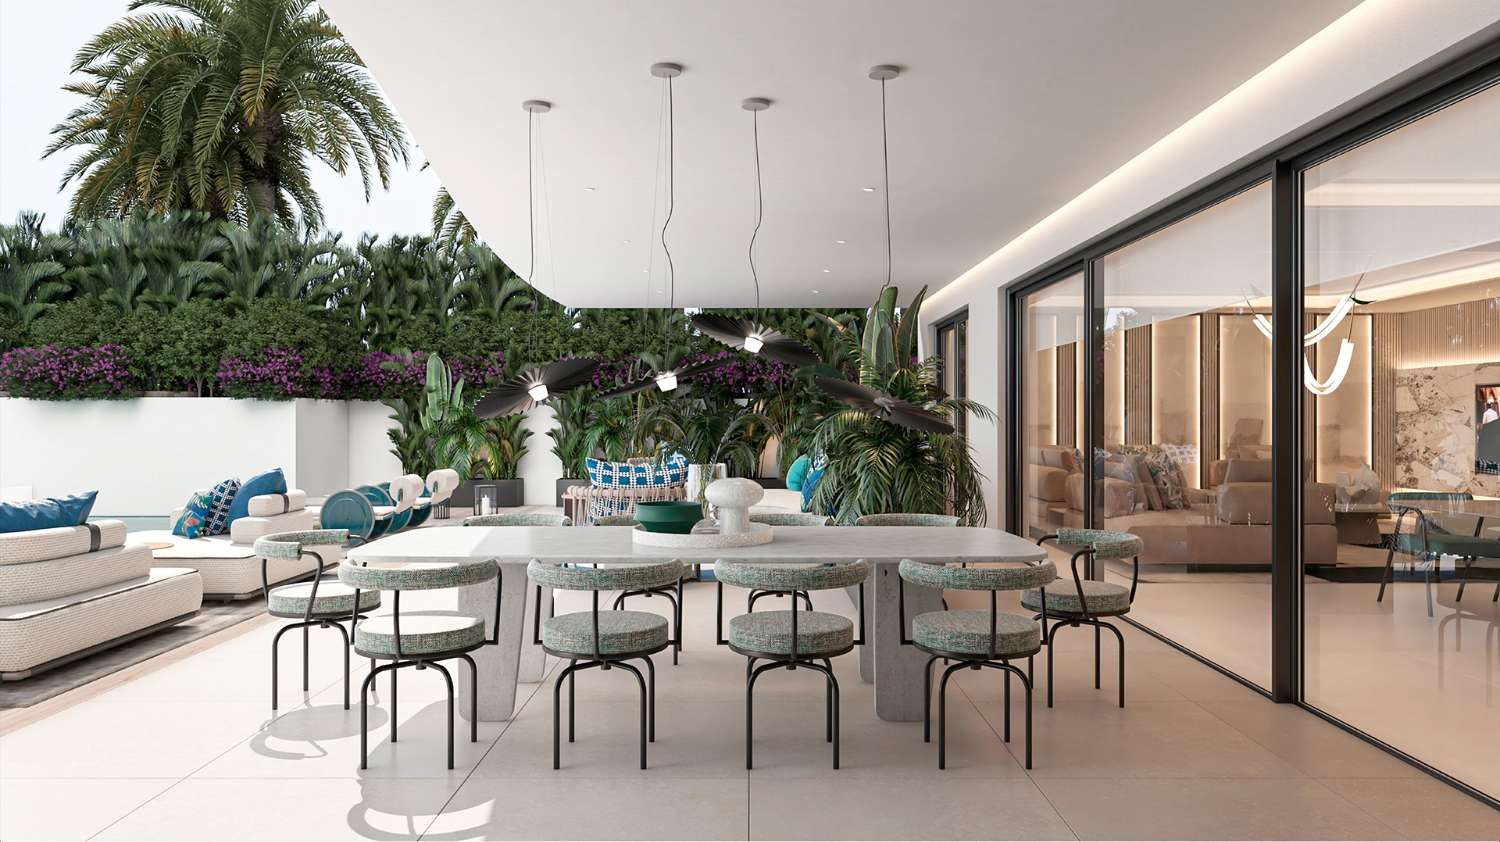 Exclusive luxury homes on the beachfront, Las Chapas, Marbella!